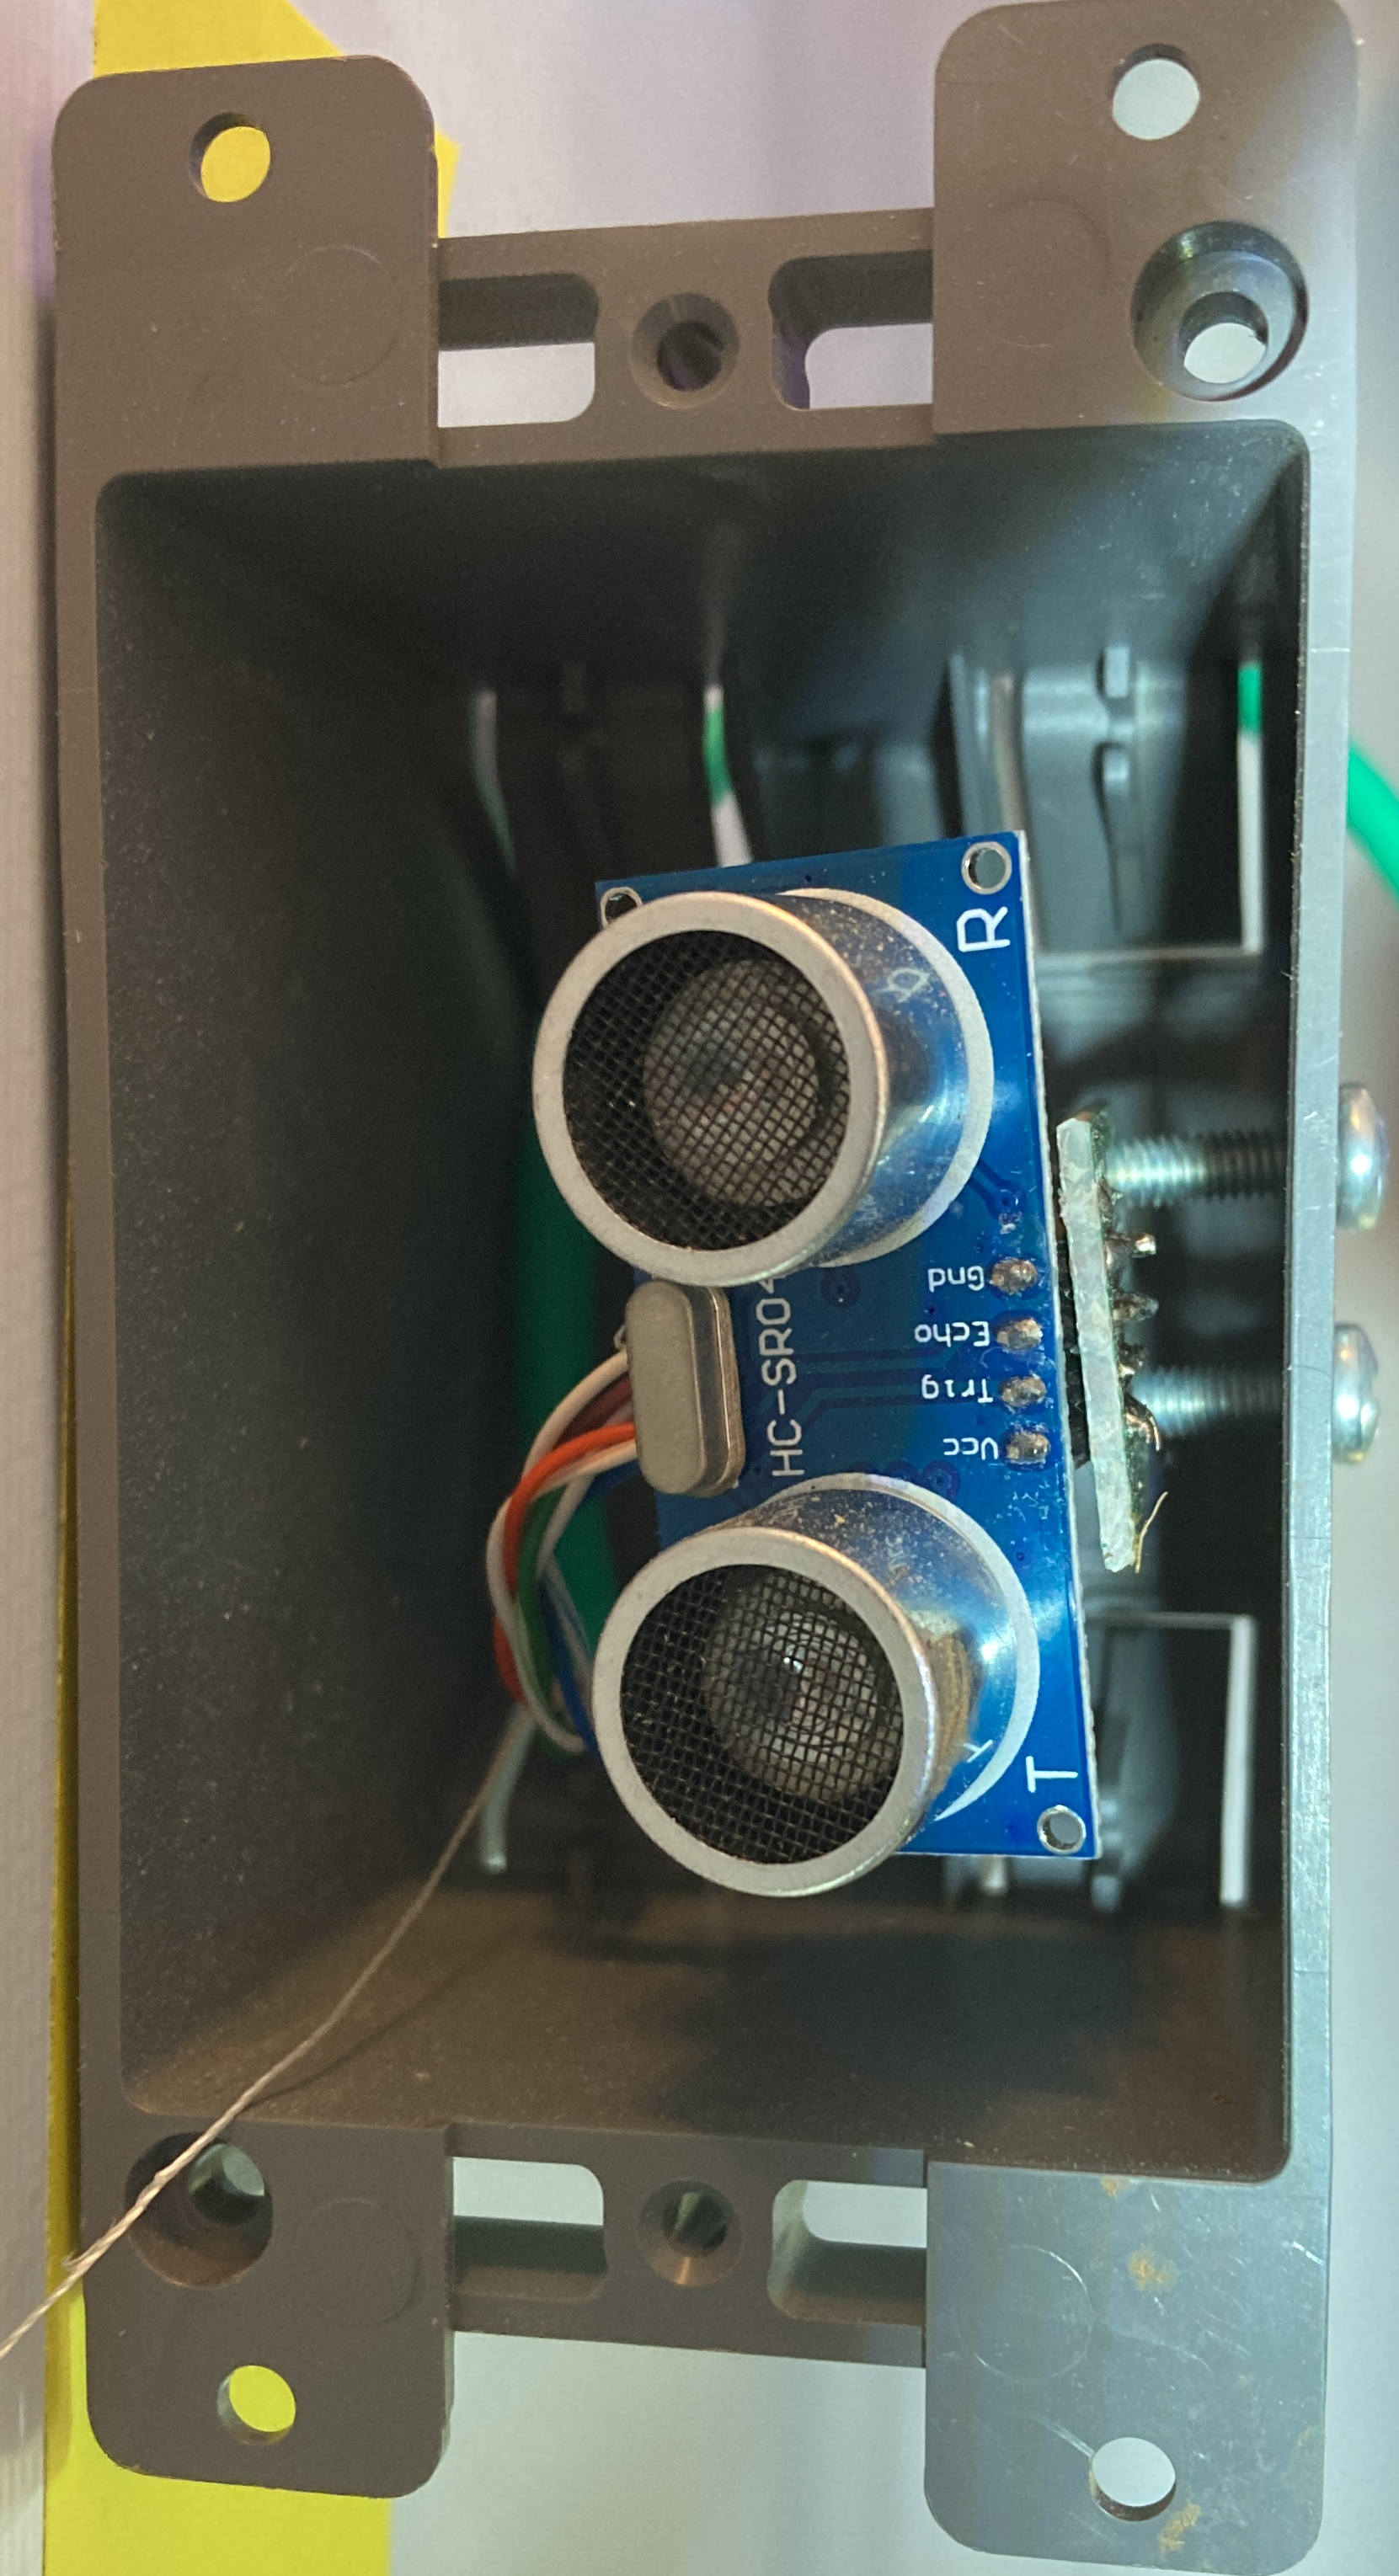 HC-SR04 ultrasonic sensor in mount